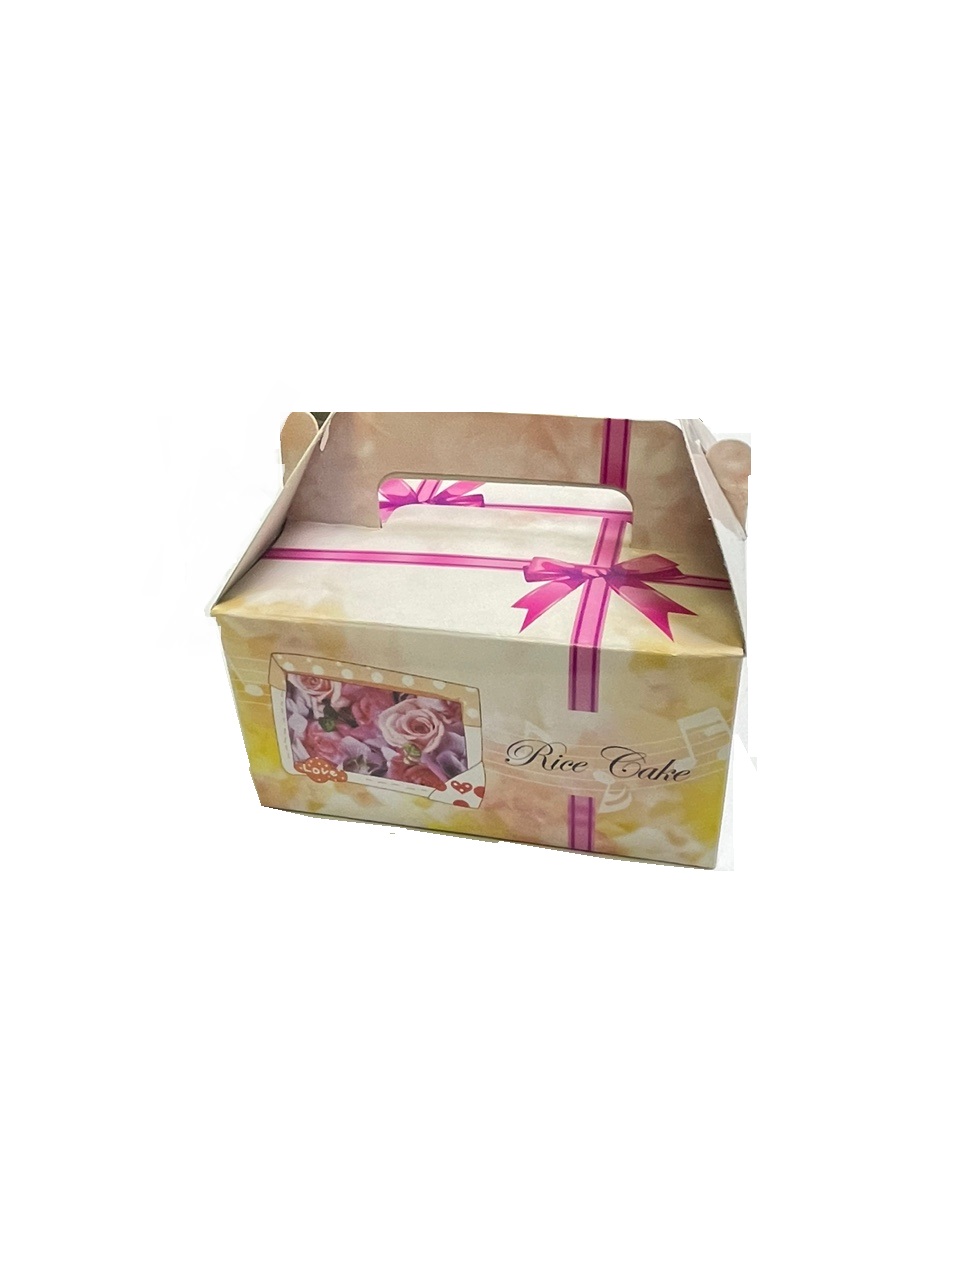 (DKJ) 선물용 미니 떡 박스 1개(가로14.5*세로11*높이 7.5cm)/영양떡,두떱떡, 백설기,인절미400g, 송편400g,꿀떡 400g등 포장가능